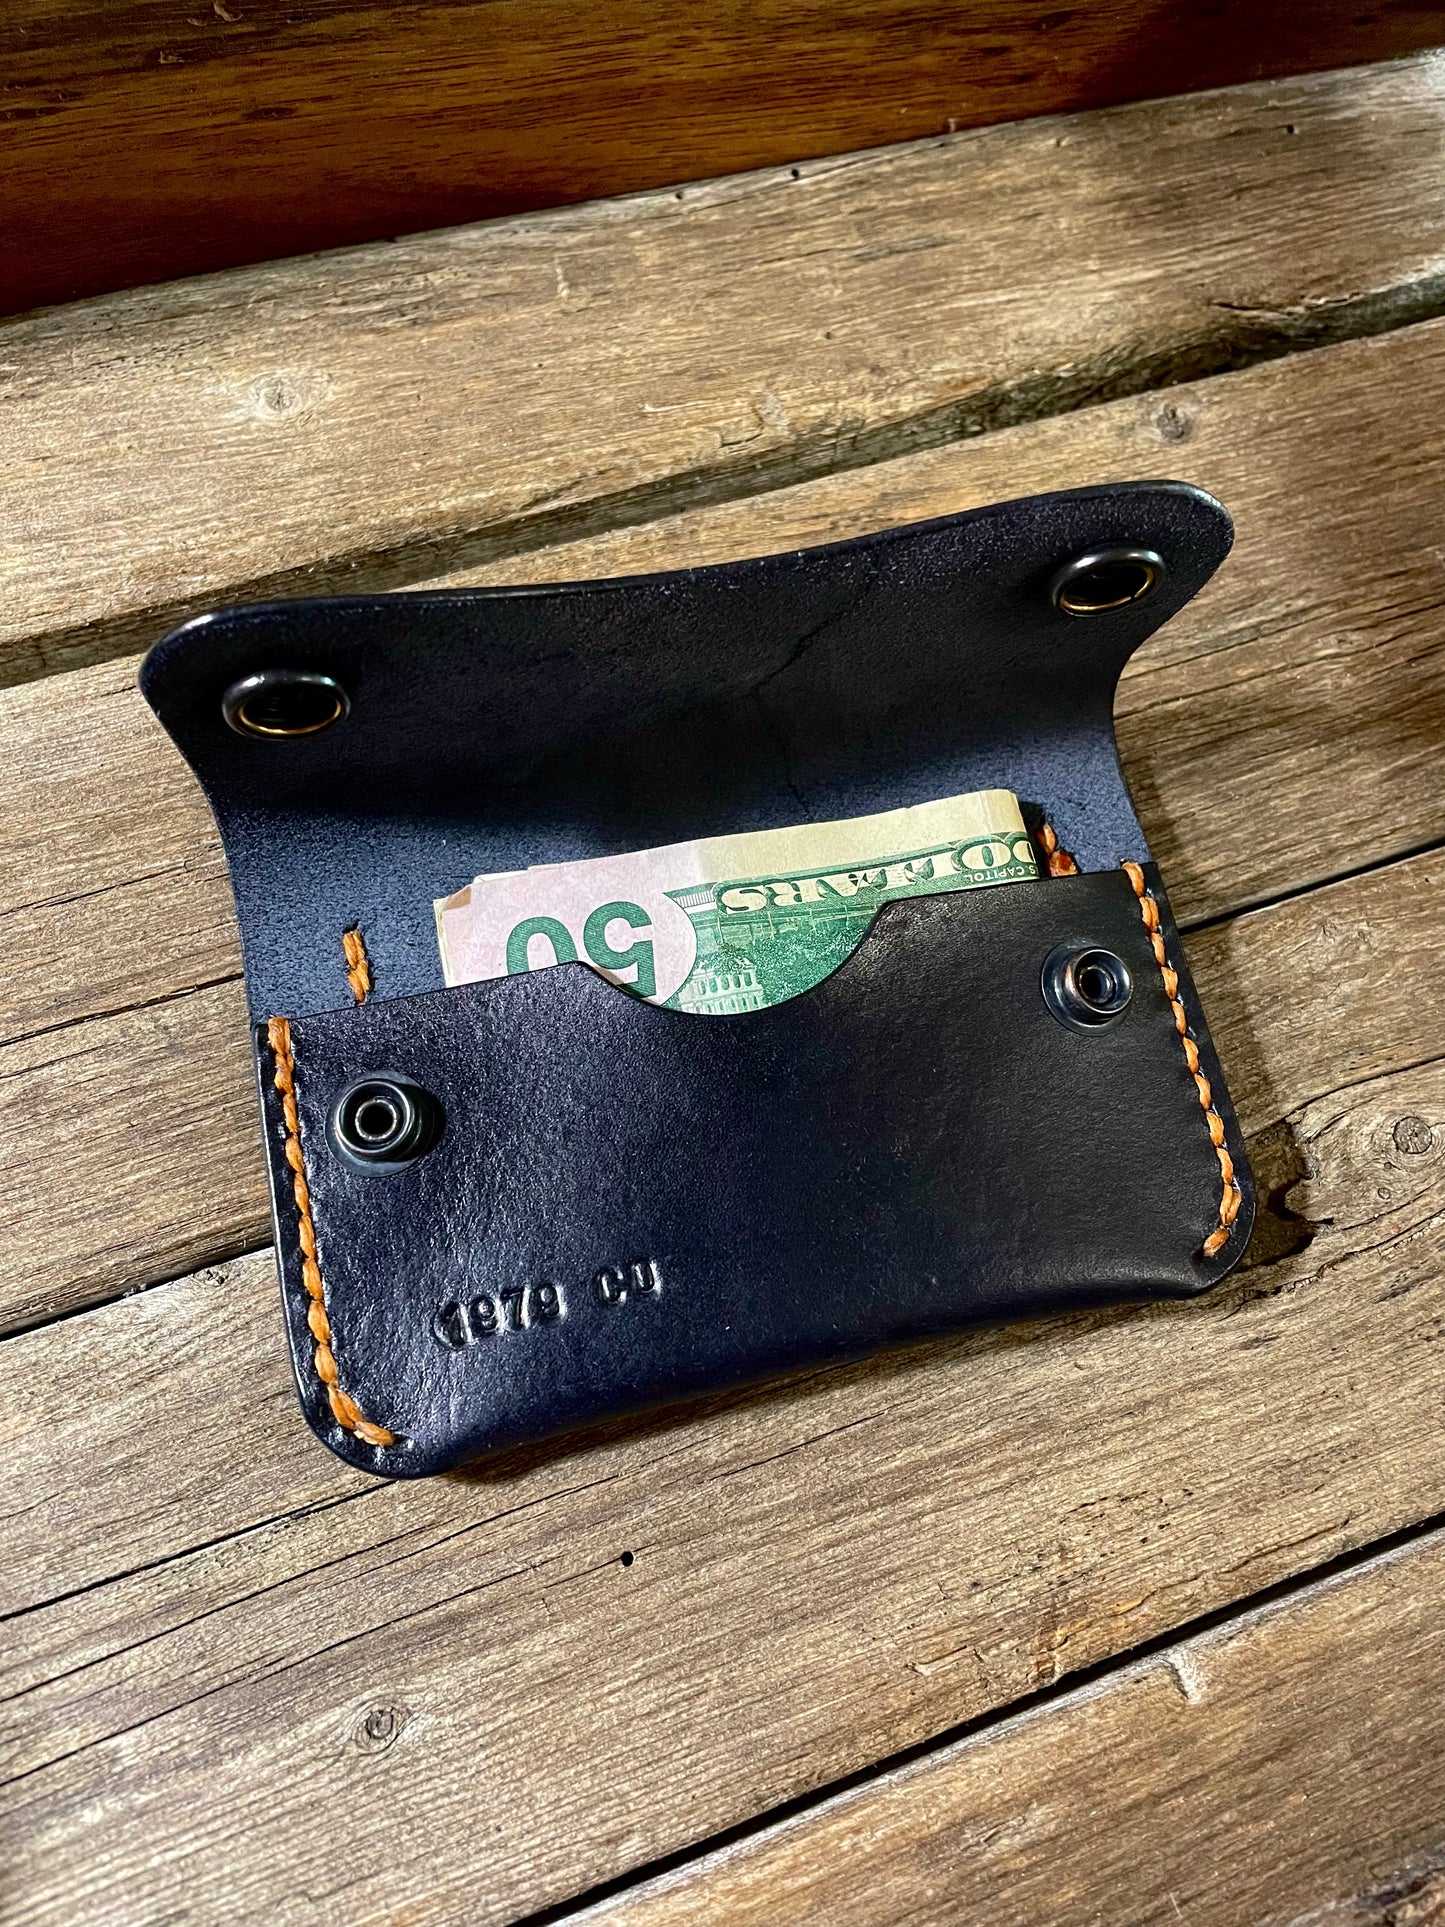 Michael Myer’s Wallet